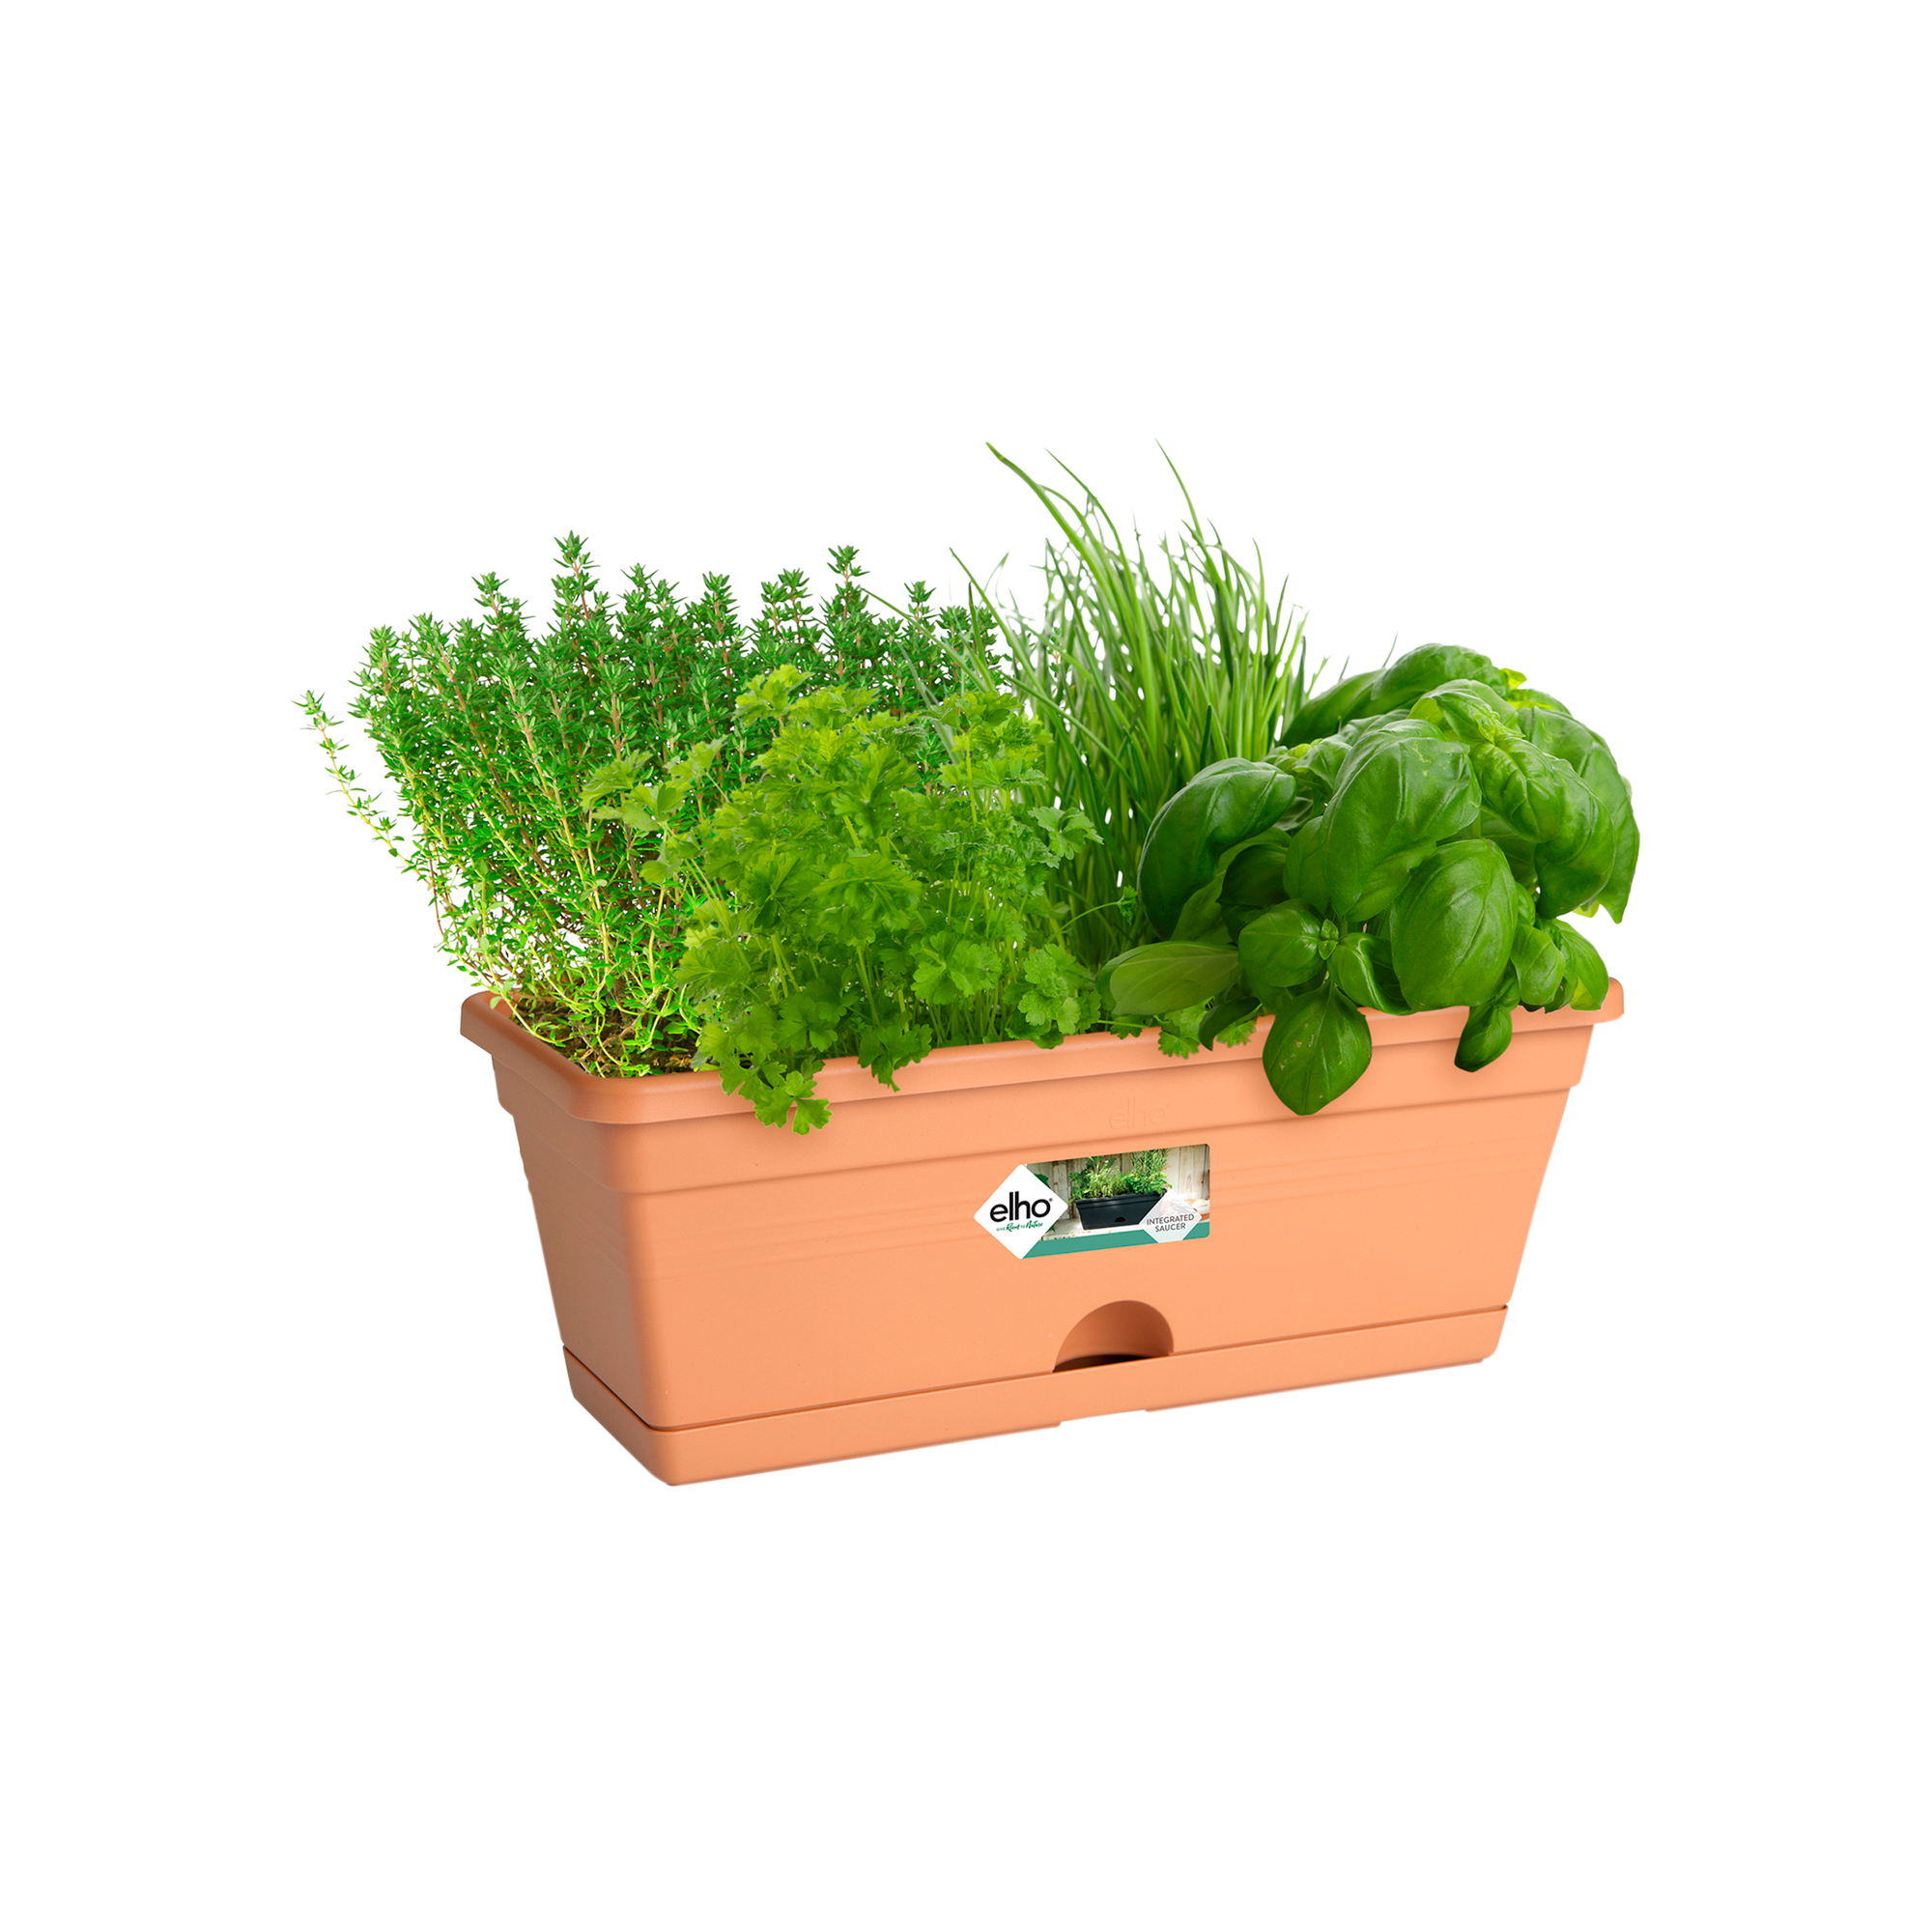 green basics to terra - mini 30cm nature elho® Give mild - balkonkasten room